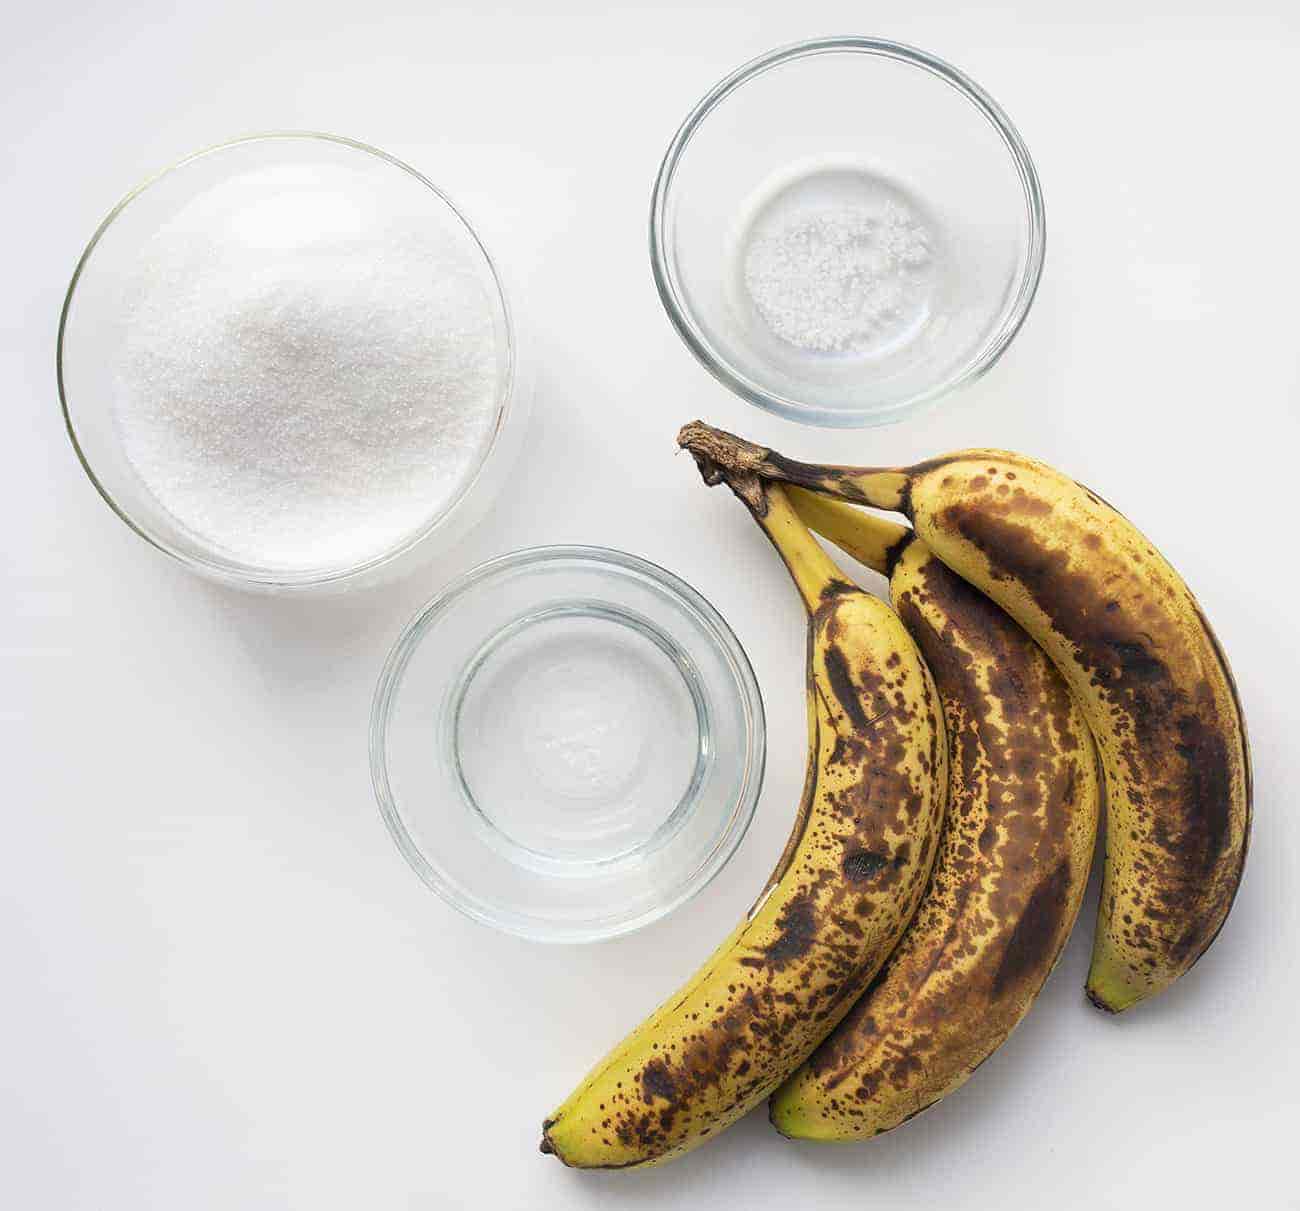 Banana Bliss Elixir: Craft Your Own Banana Simple Syrup